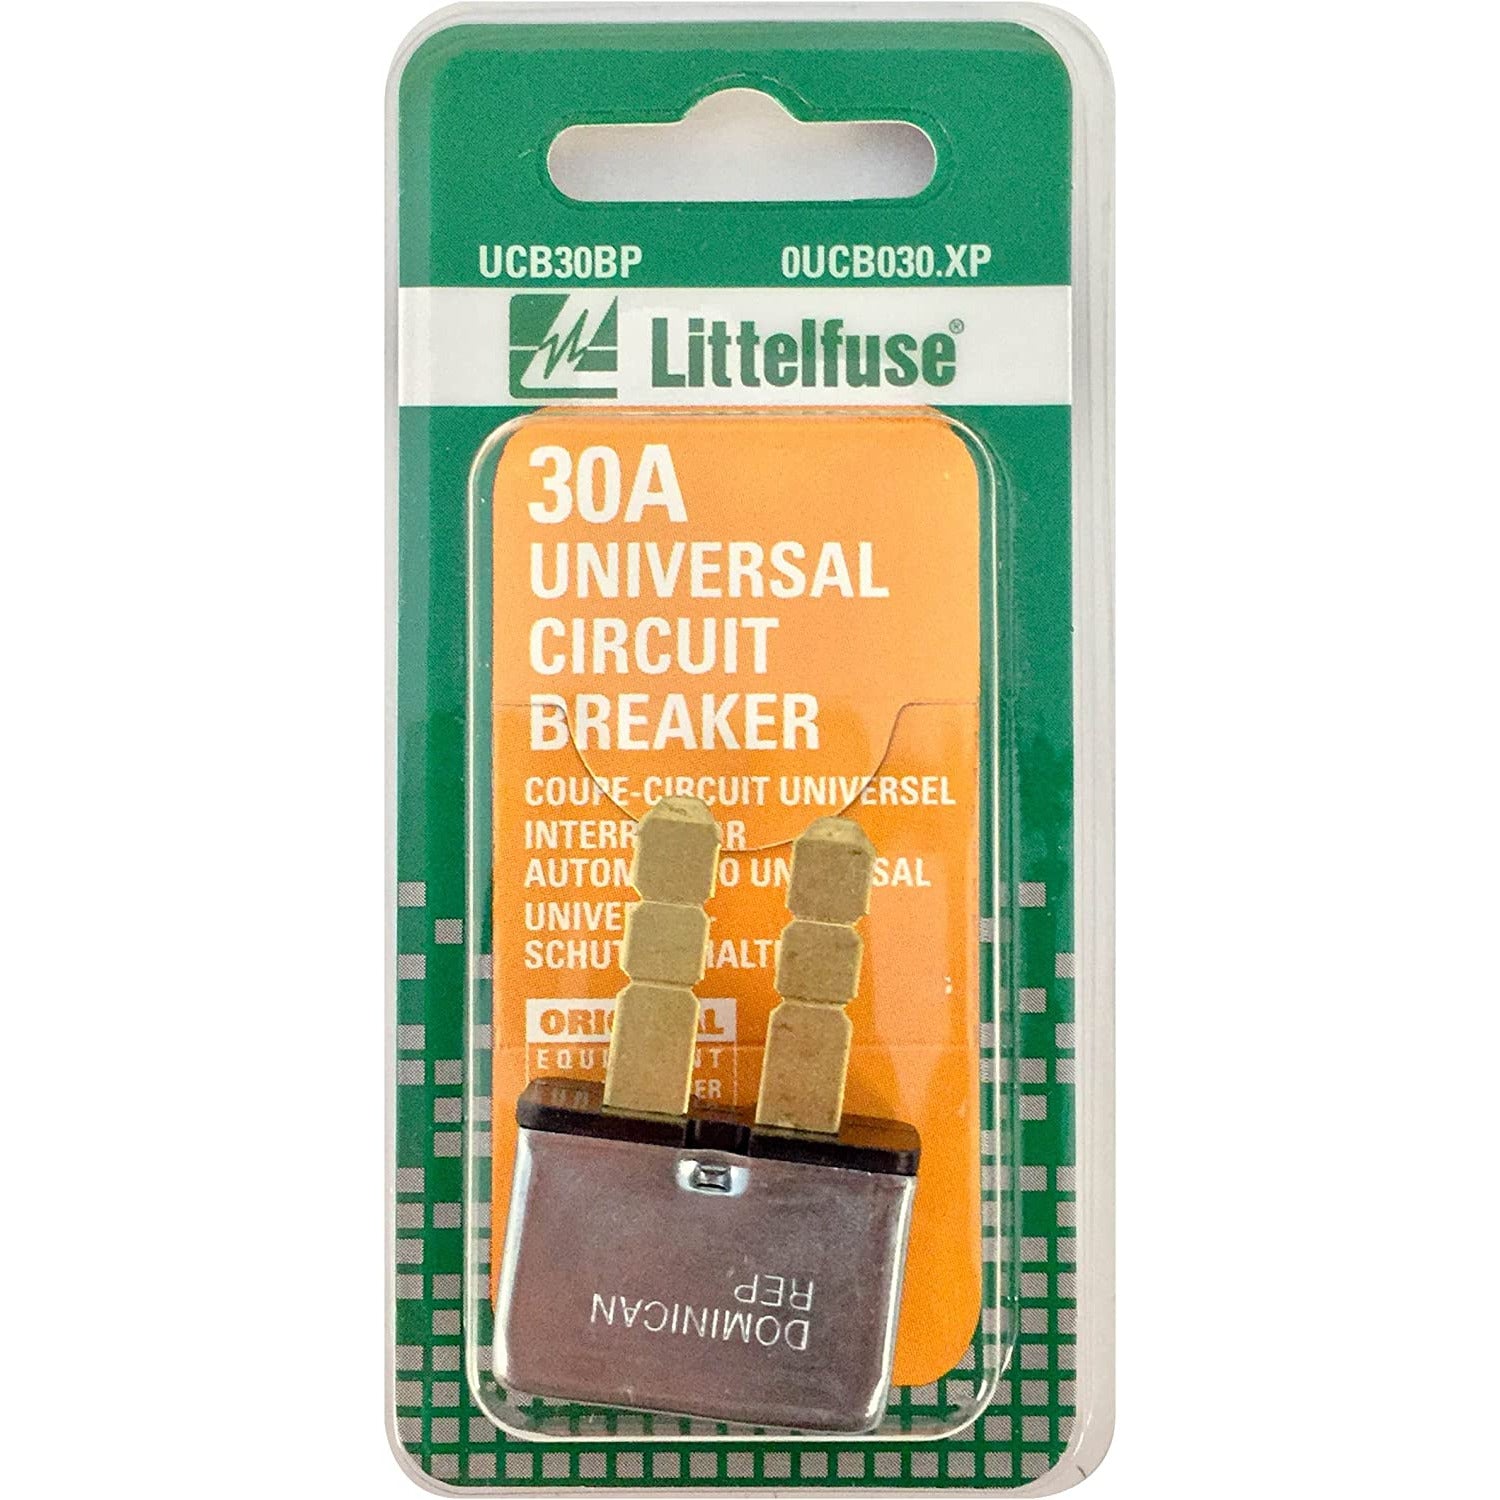 FUS 0UCB030.XP Littelfuse ATO Type Circuit Breaker (30A)